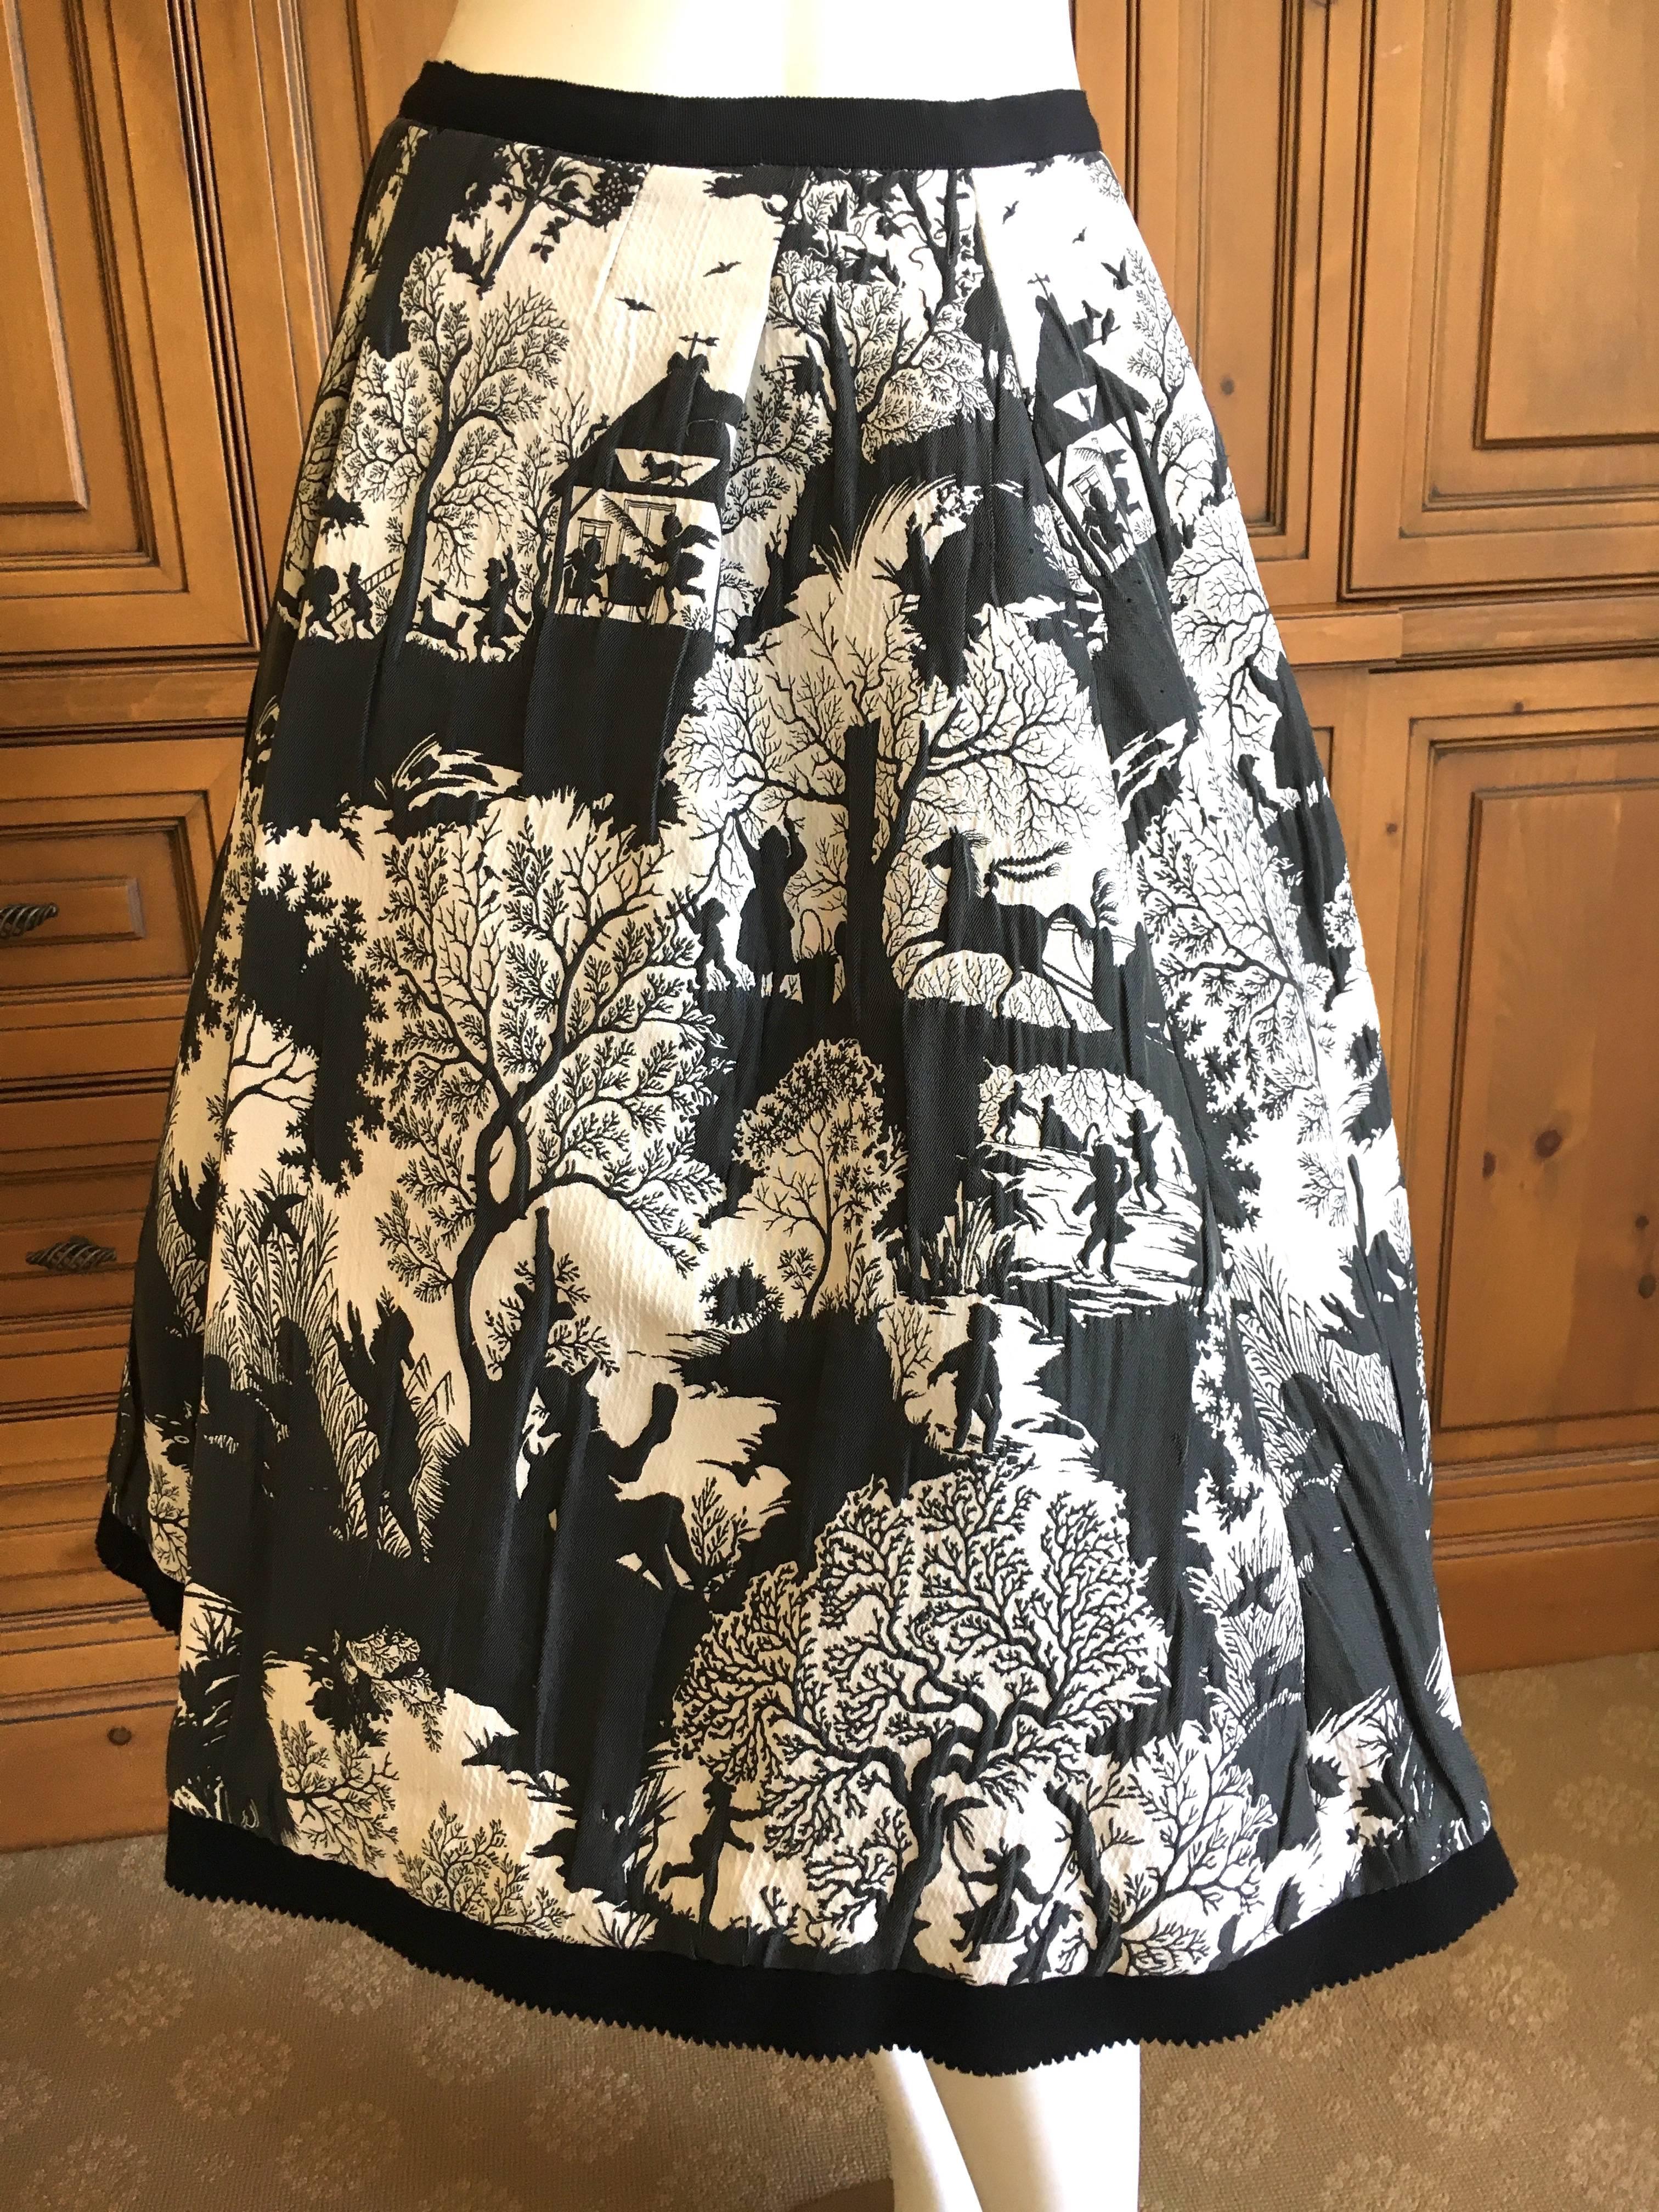 Women's Oscar de la Renta Charming Black and White Toile de Jouy Skirt with 3 Petticoats